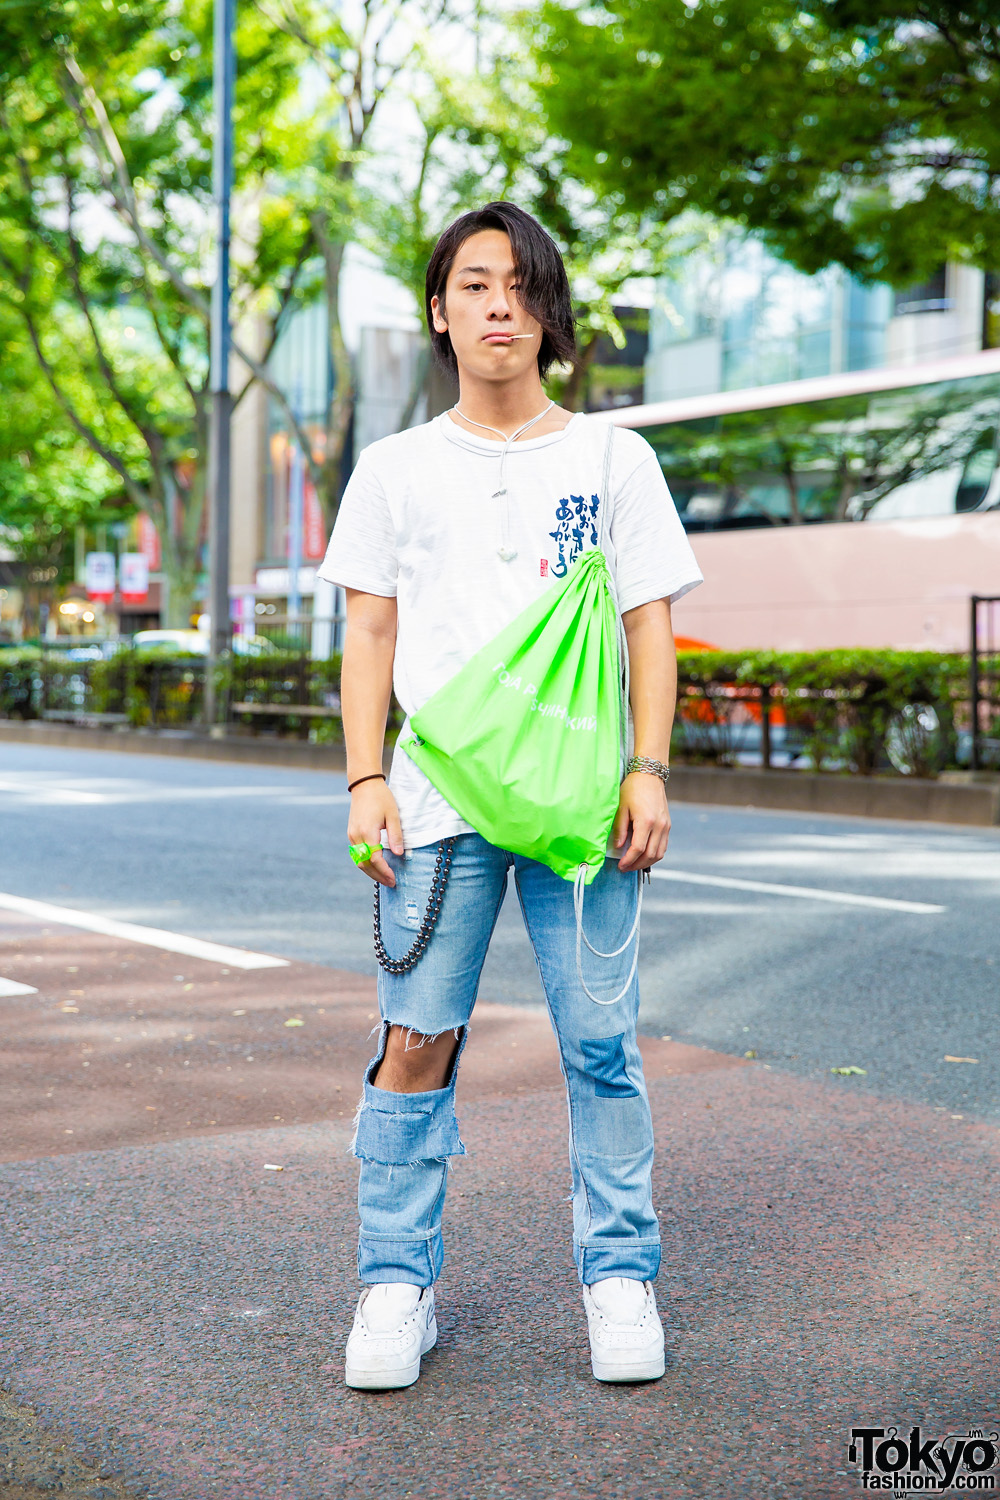 Harajuku Guy w/ Vintage Tee, Levi’s Ripped Jeans, Gosha Rubchinskiy x Adidas Bag & Nike Sneakers